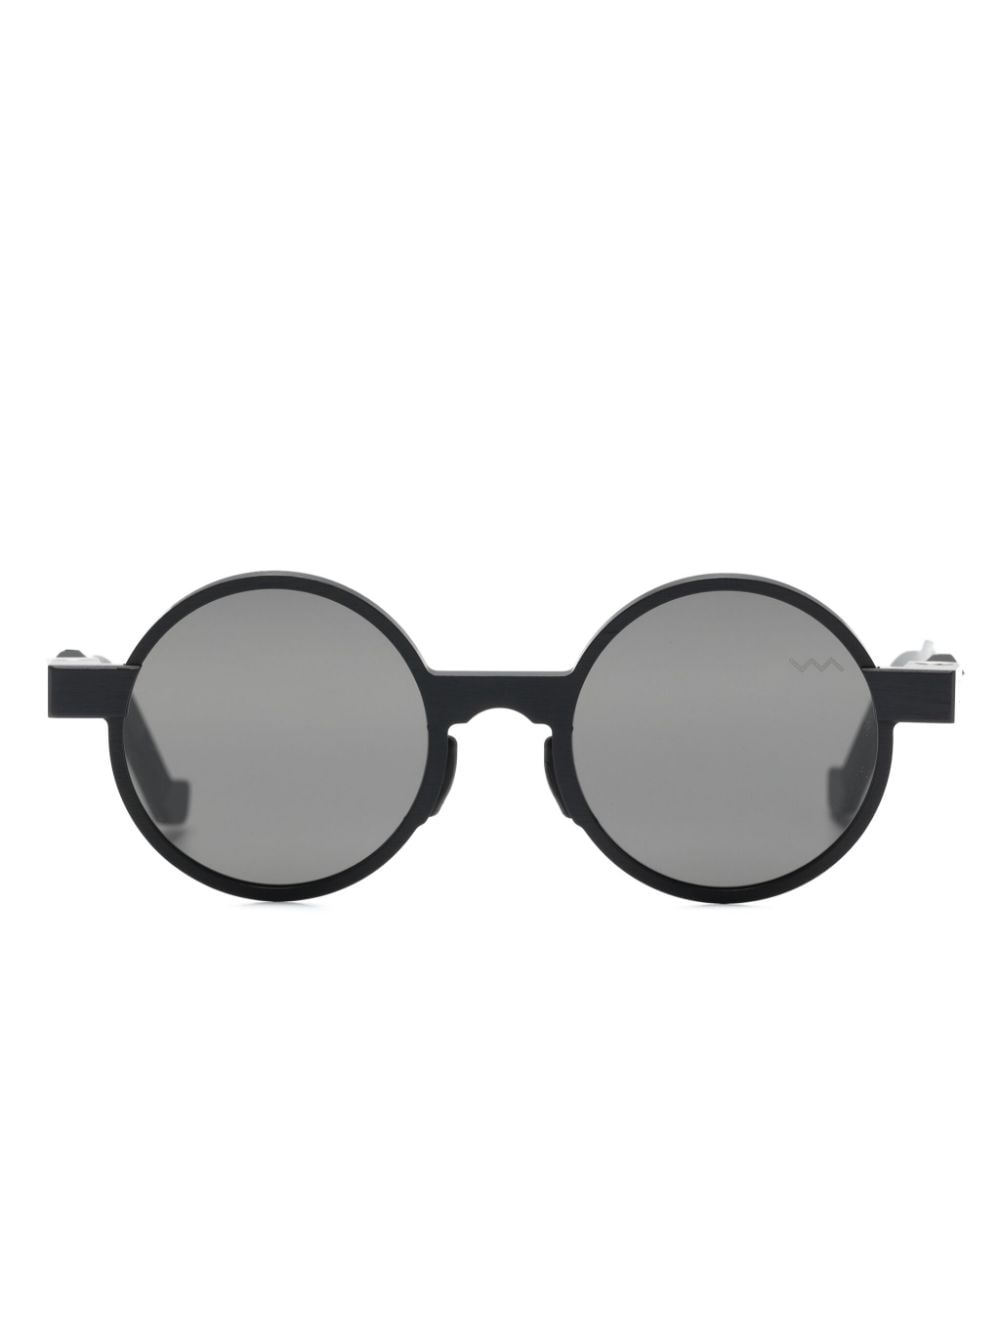 WL0014 round-frame sunglasses